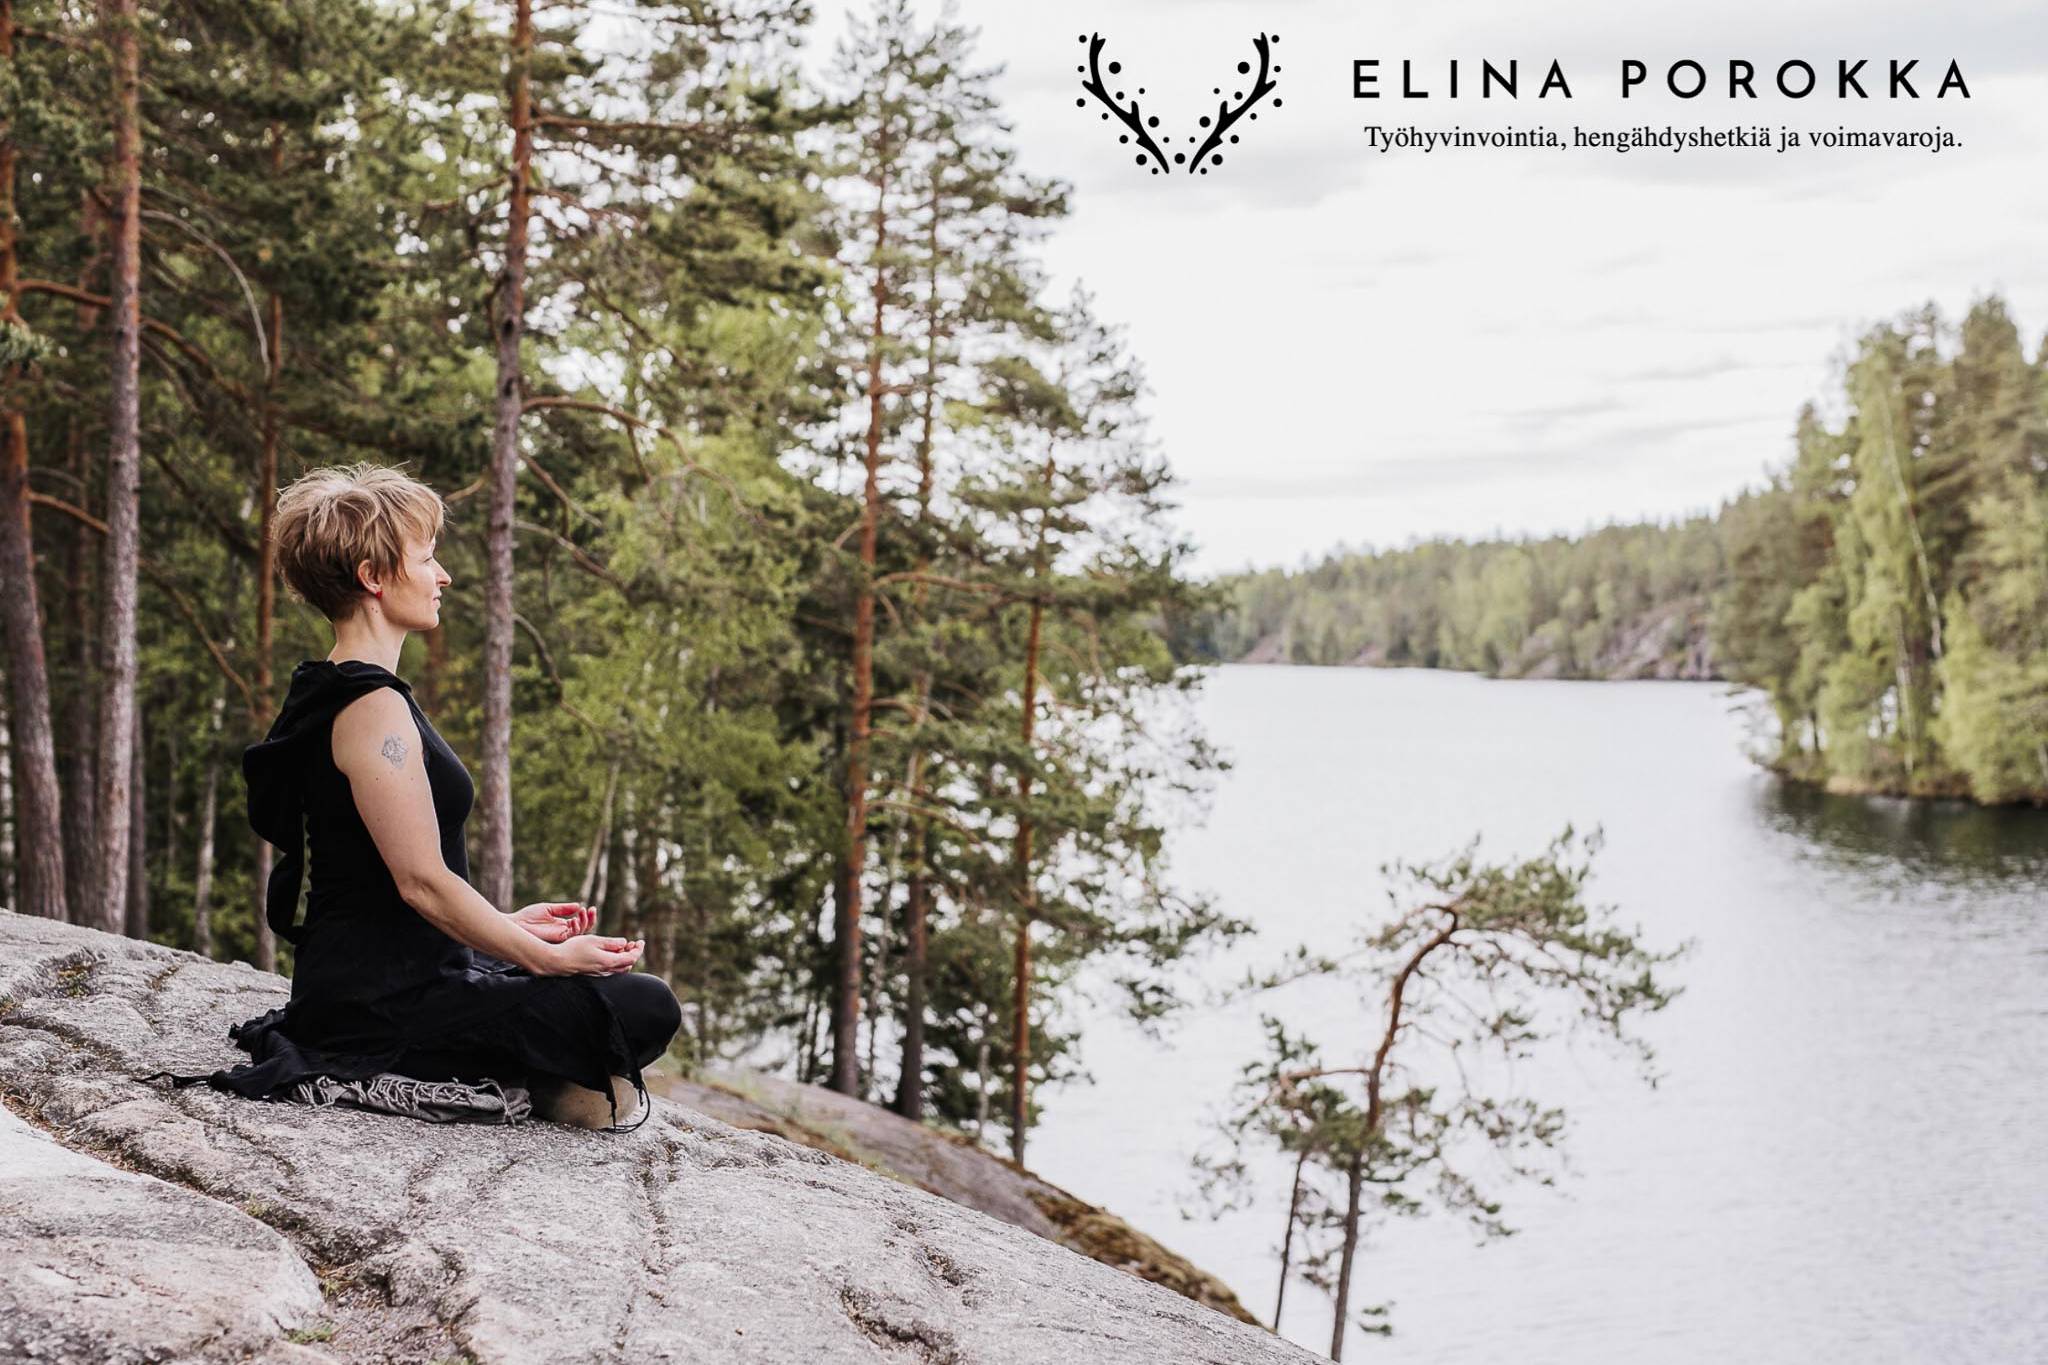 Elina Porokka page